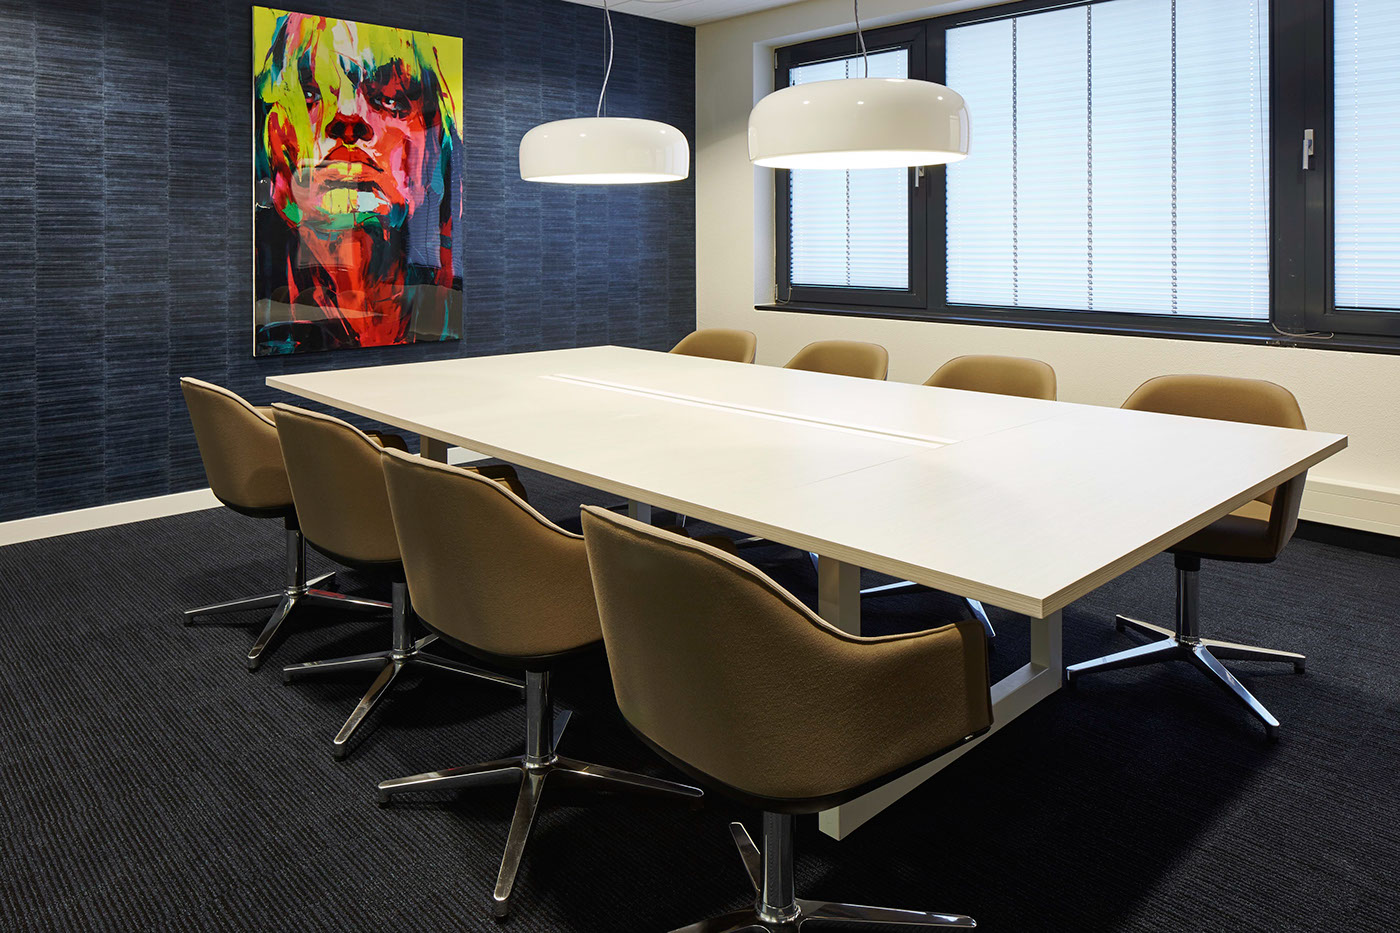 BDO innovative office design New Ways of working working environment M+R Interior Architecture